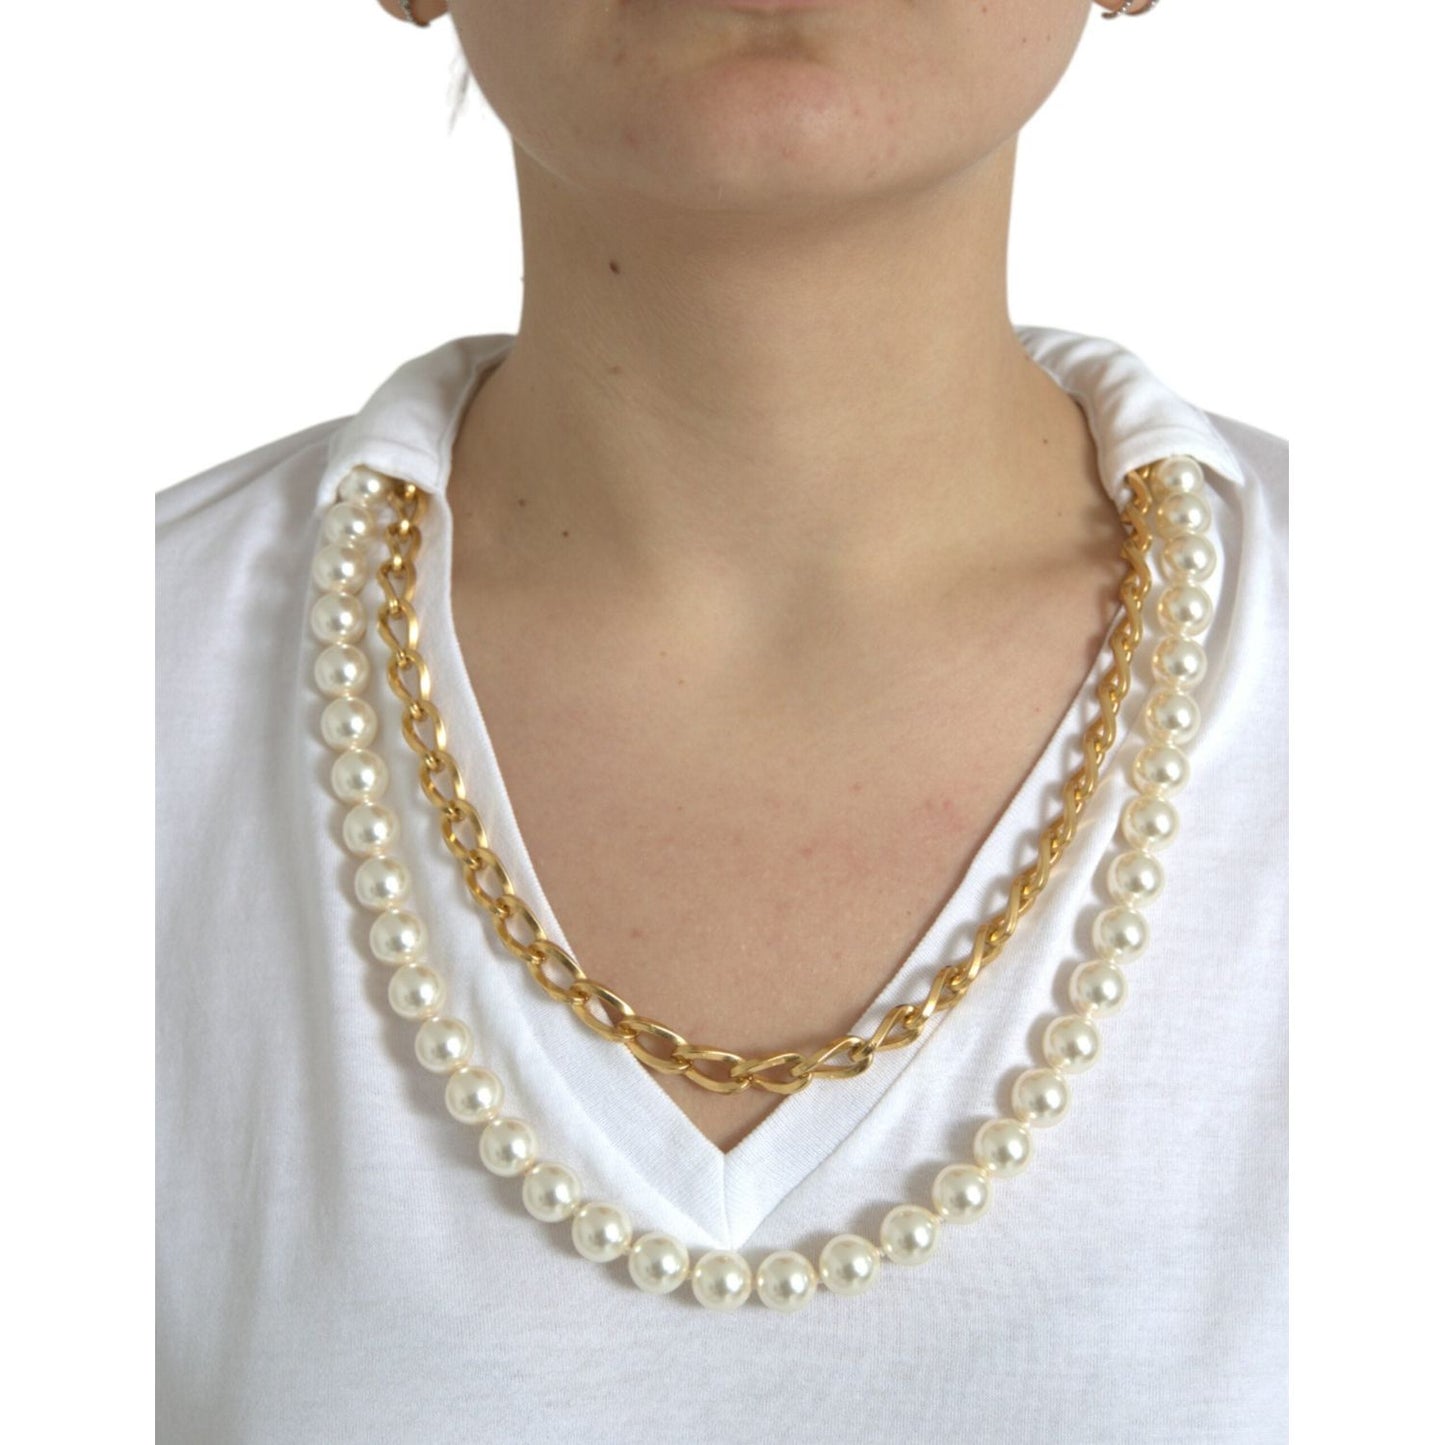 Dolce & Gabbana Elegant White Cotton Tee with Necklace Detail elegant-white-cotton-tee-with-necklace-detail